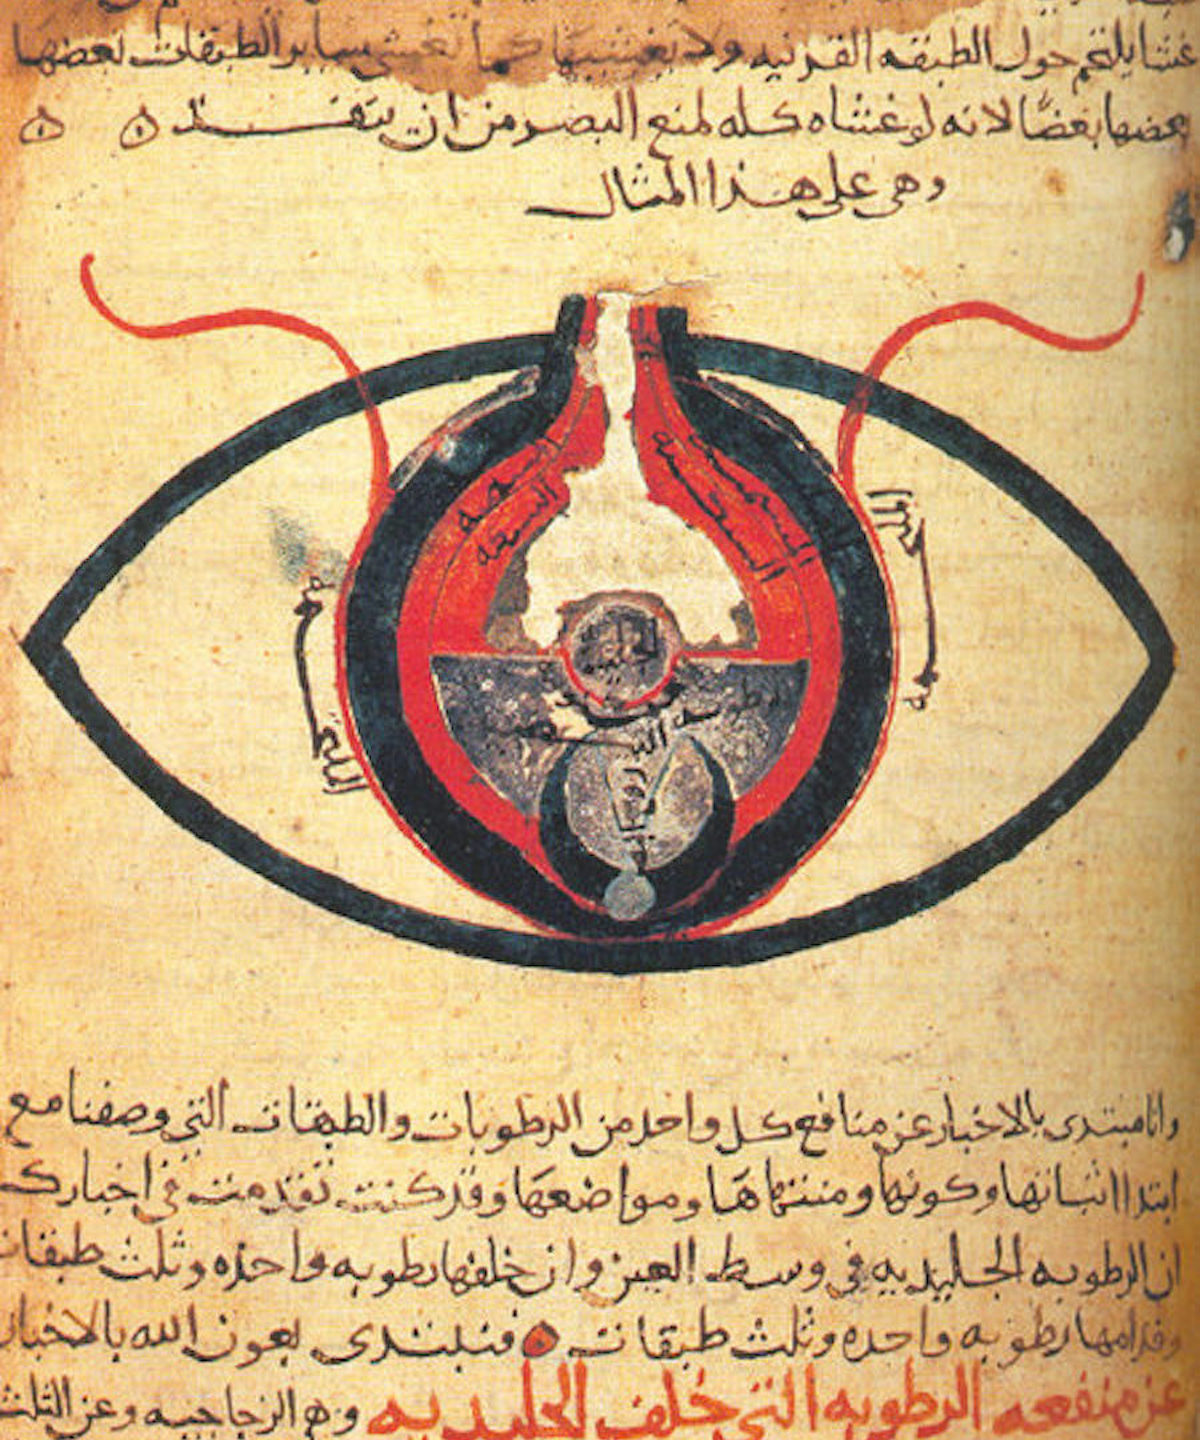 Cheshm manuscript ca 1200CE, Cairo National Library. Public domain.